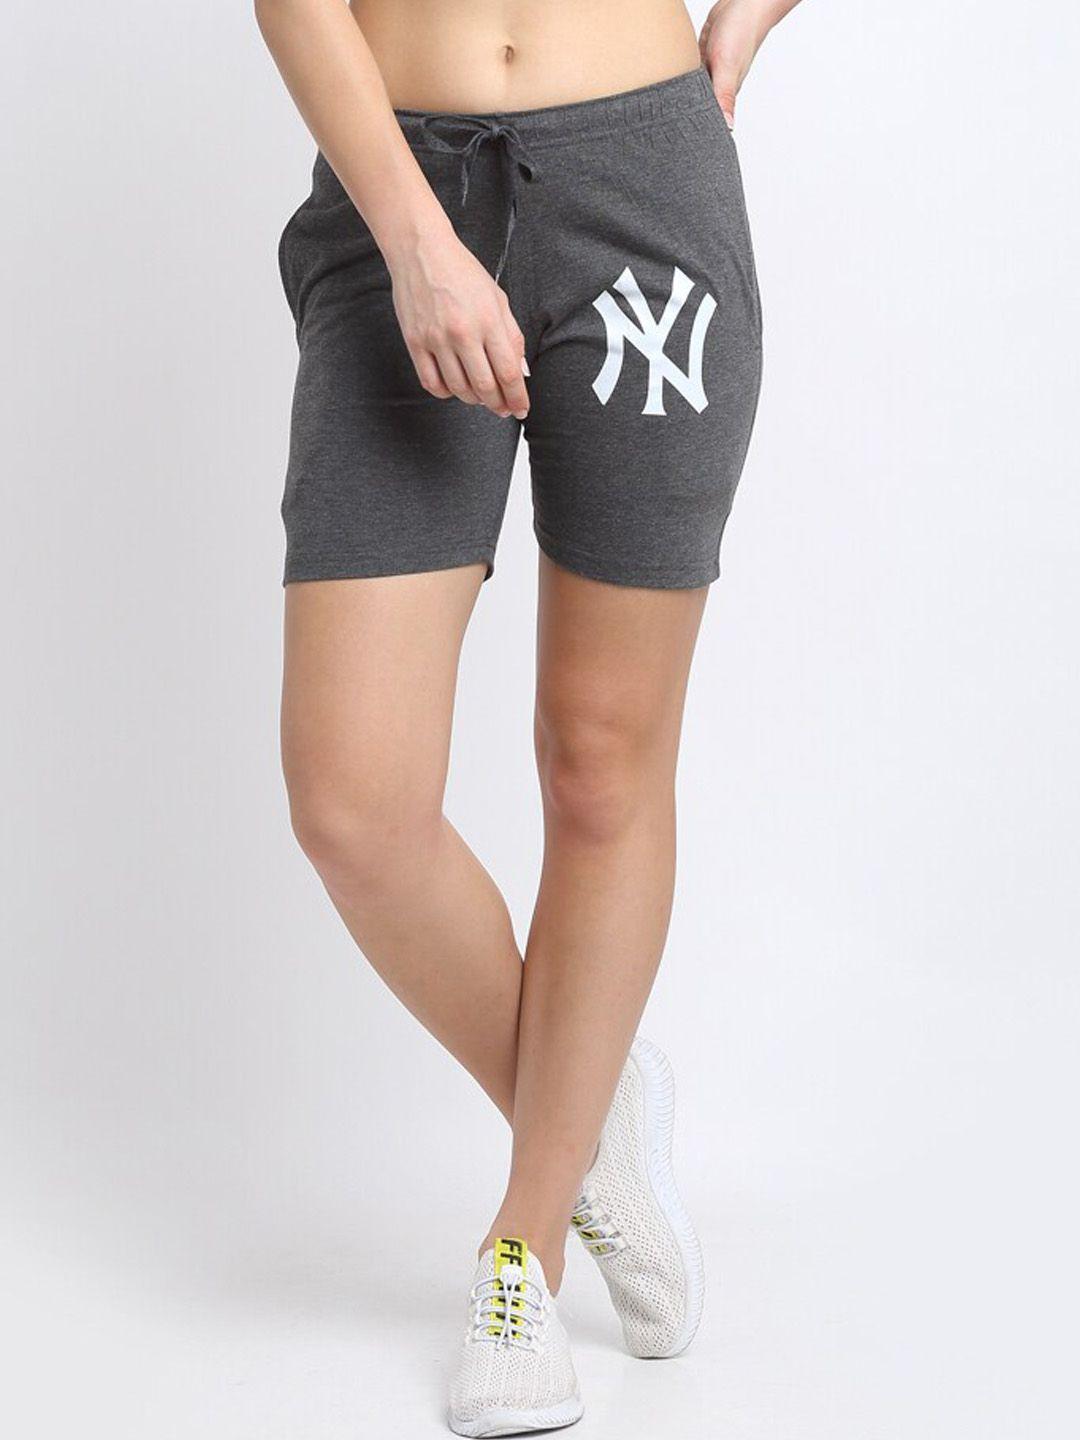 vimal jonney women charcoal grey solid printed regular shorts